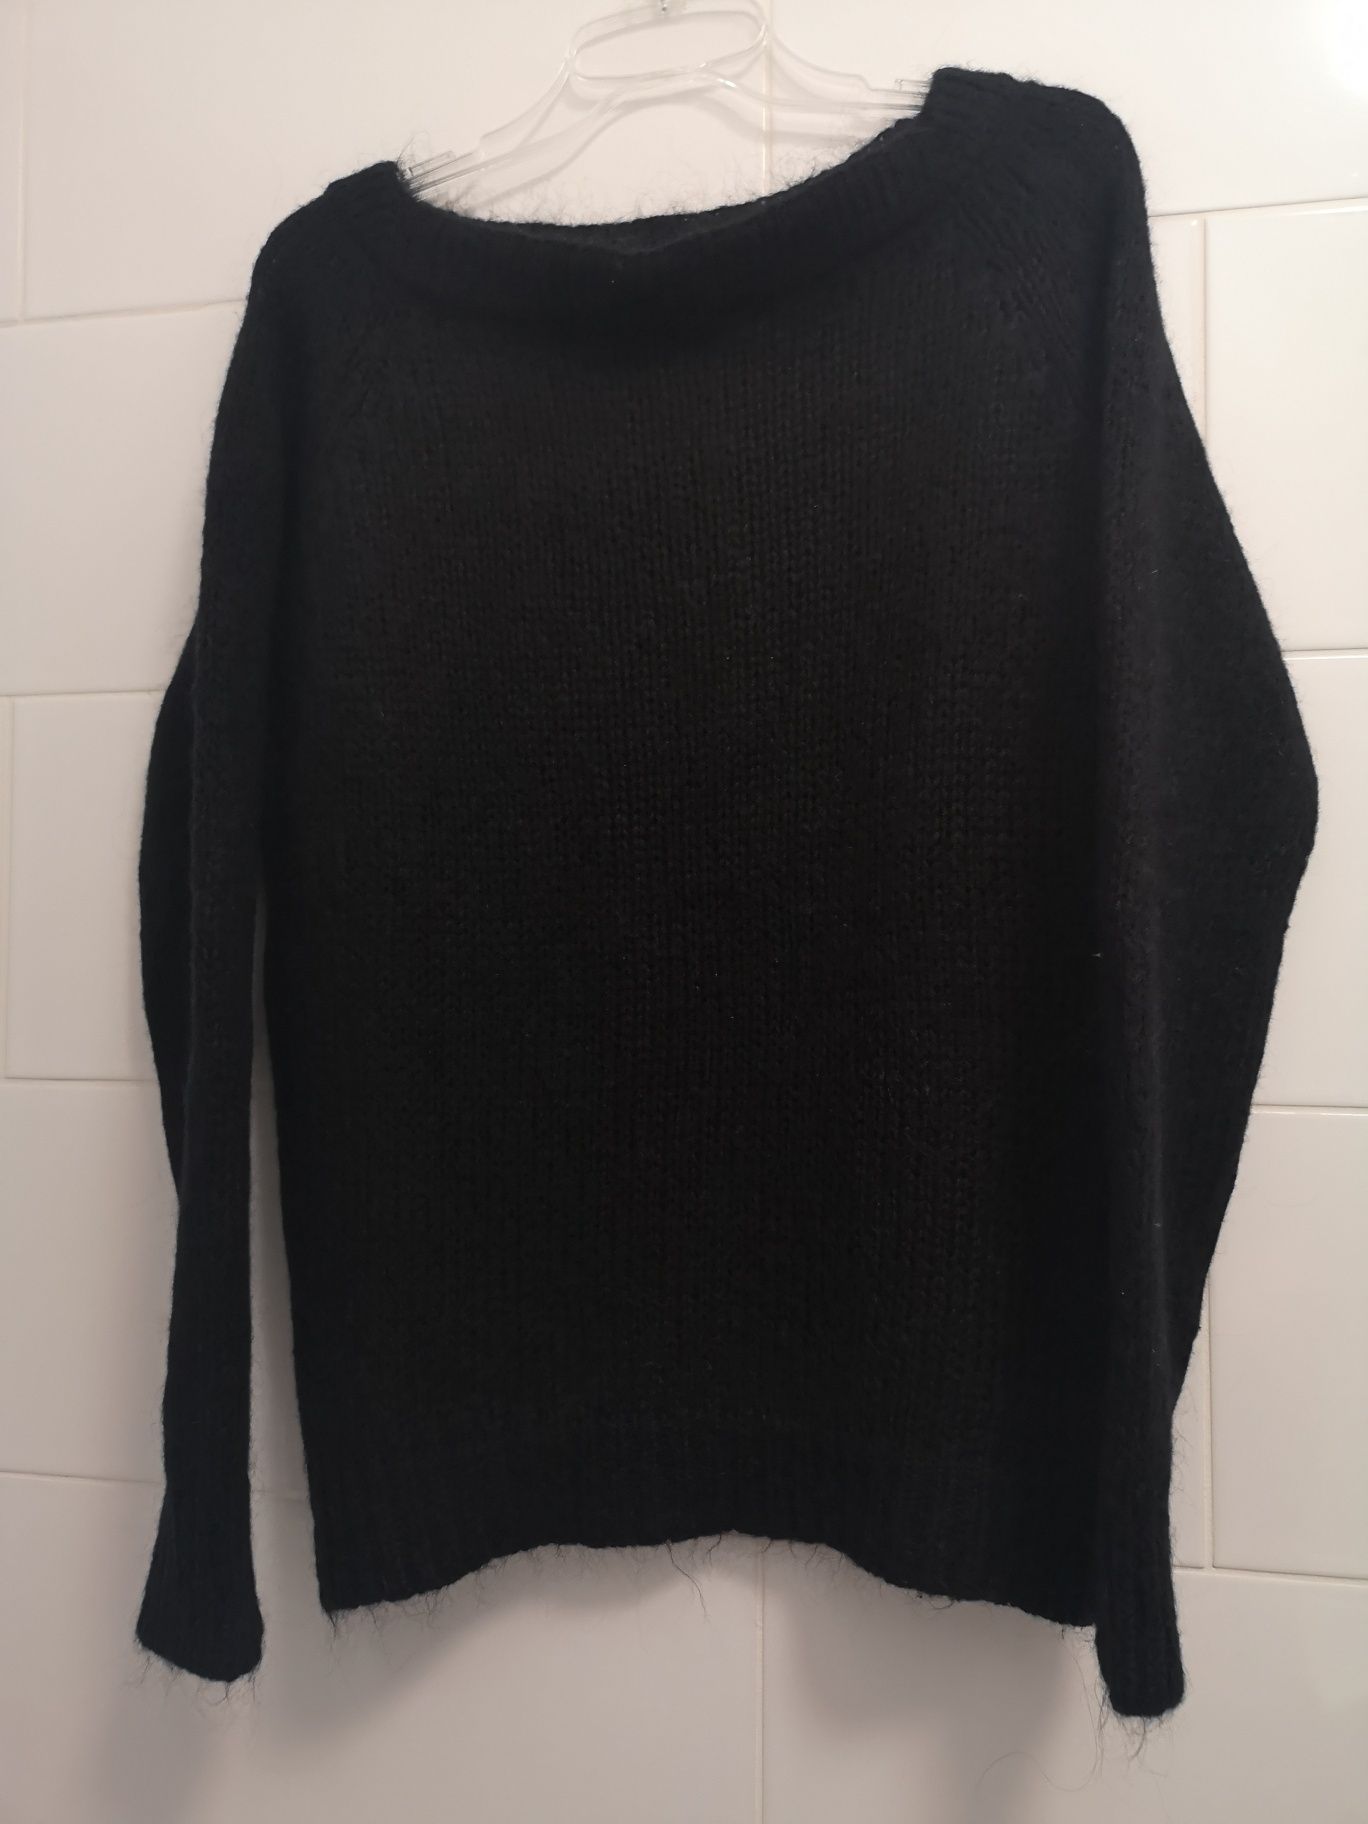 Czarny moherowy sweter INTENSI r. 34/36